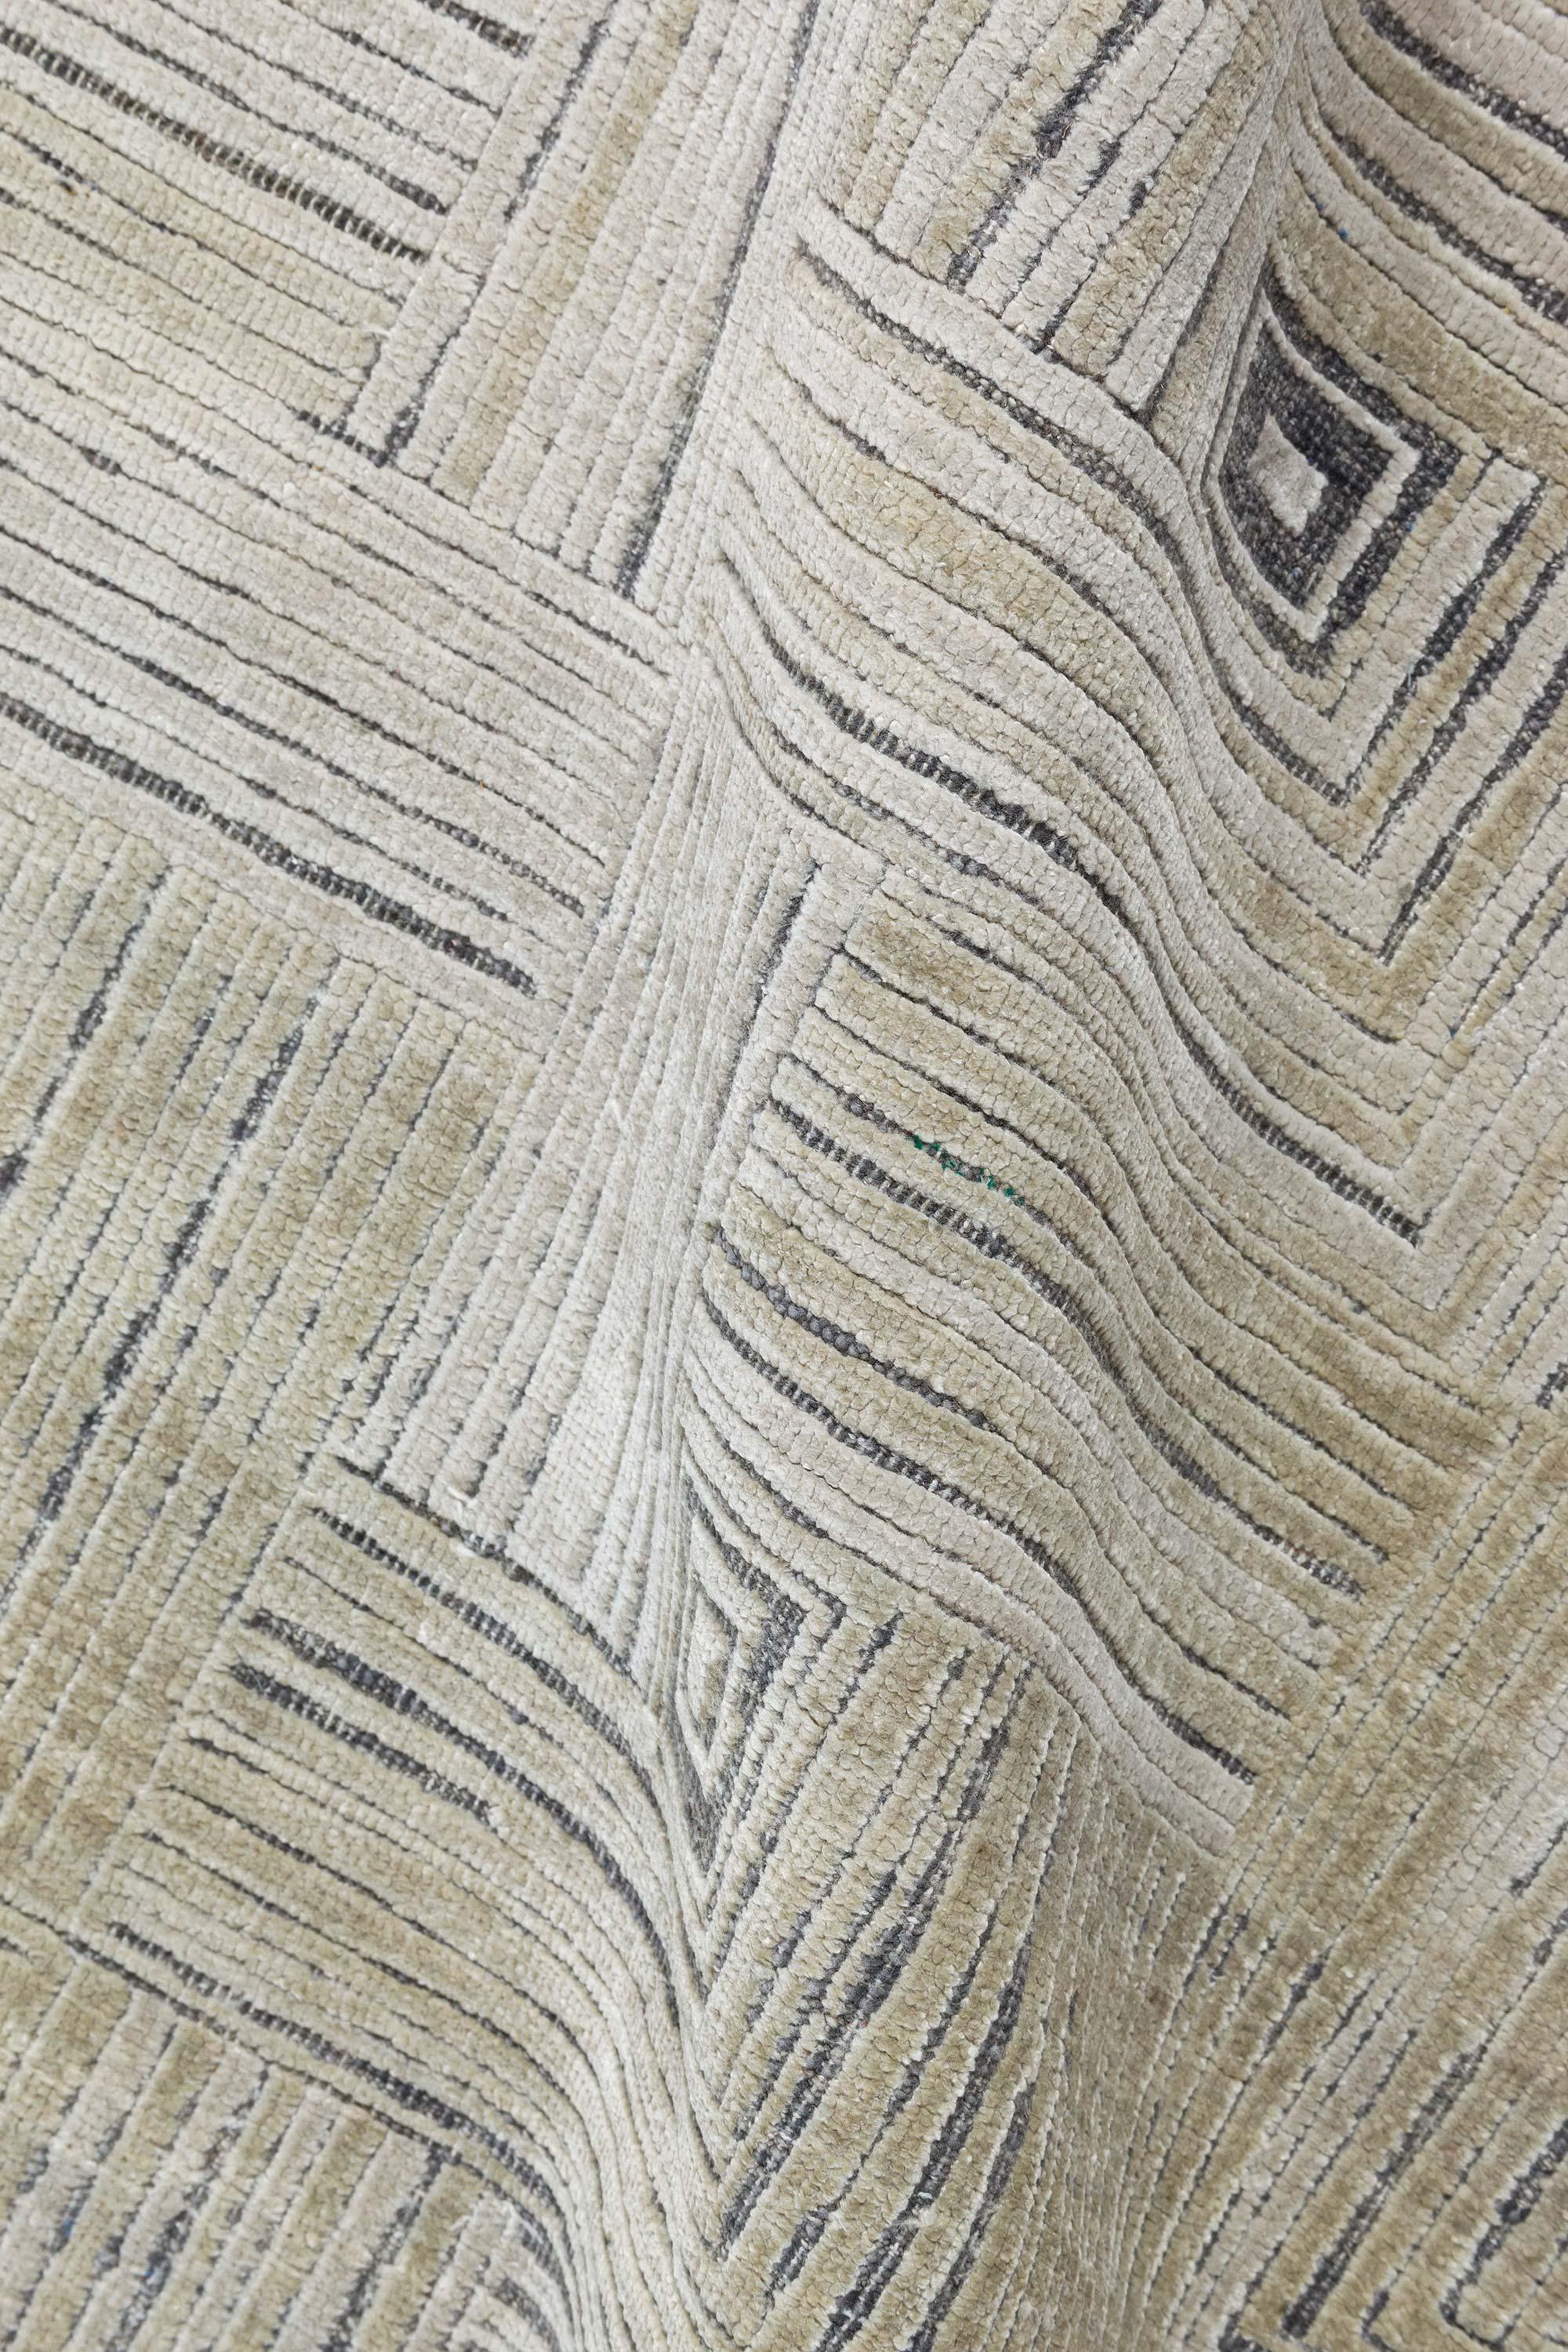 Contemporary Geometric 'Maze' hand knotted silk rug by Doris Leslie Blau
Size: 12'0